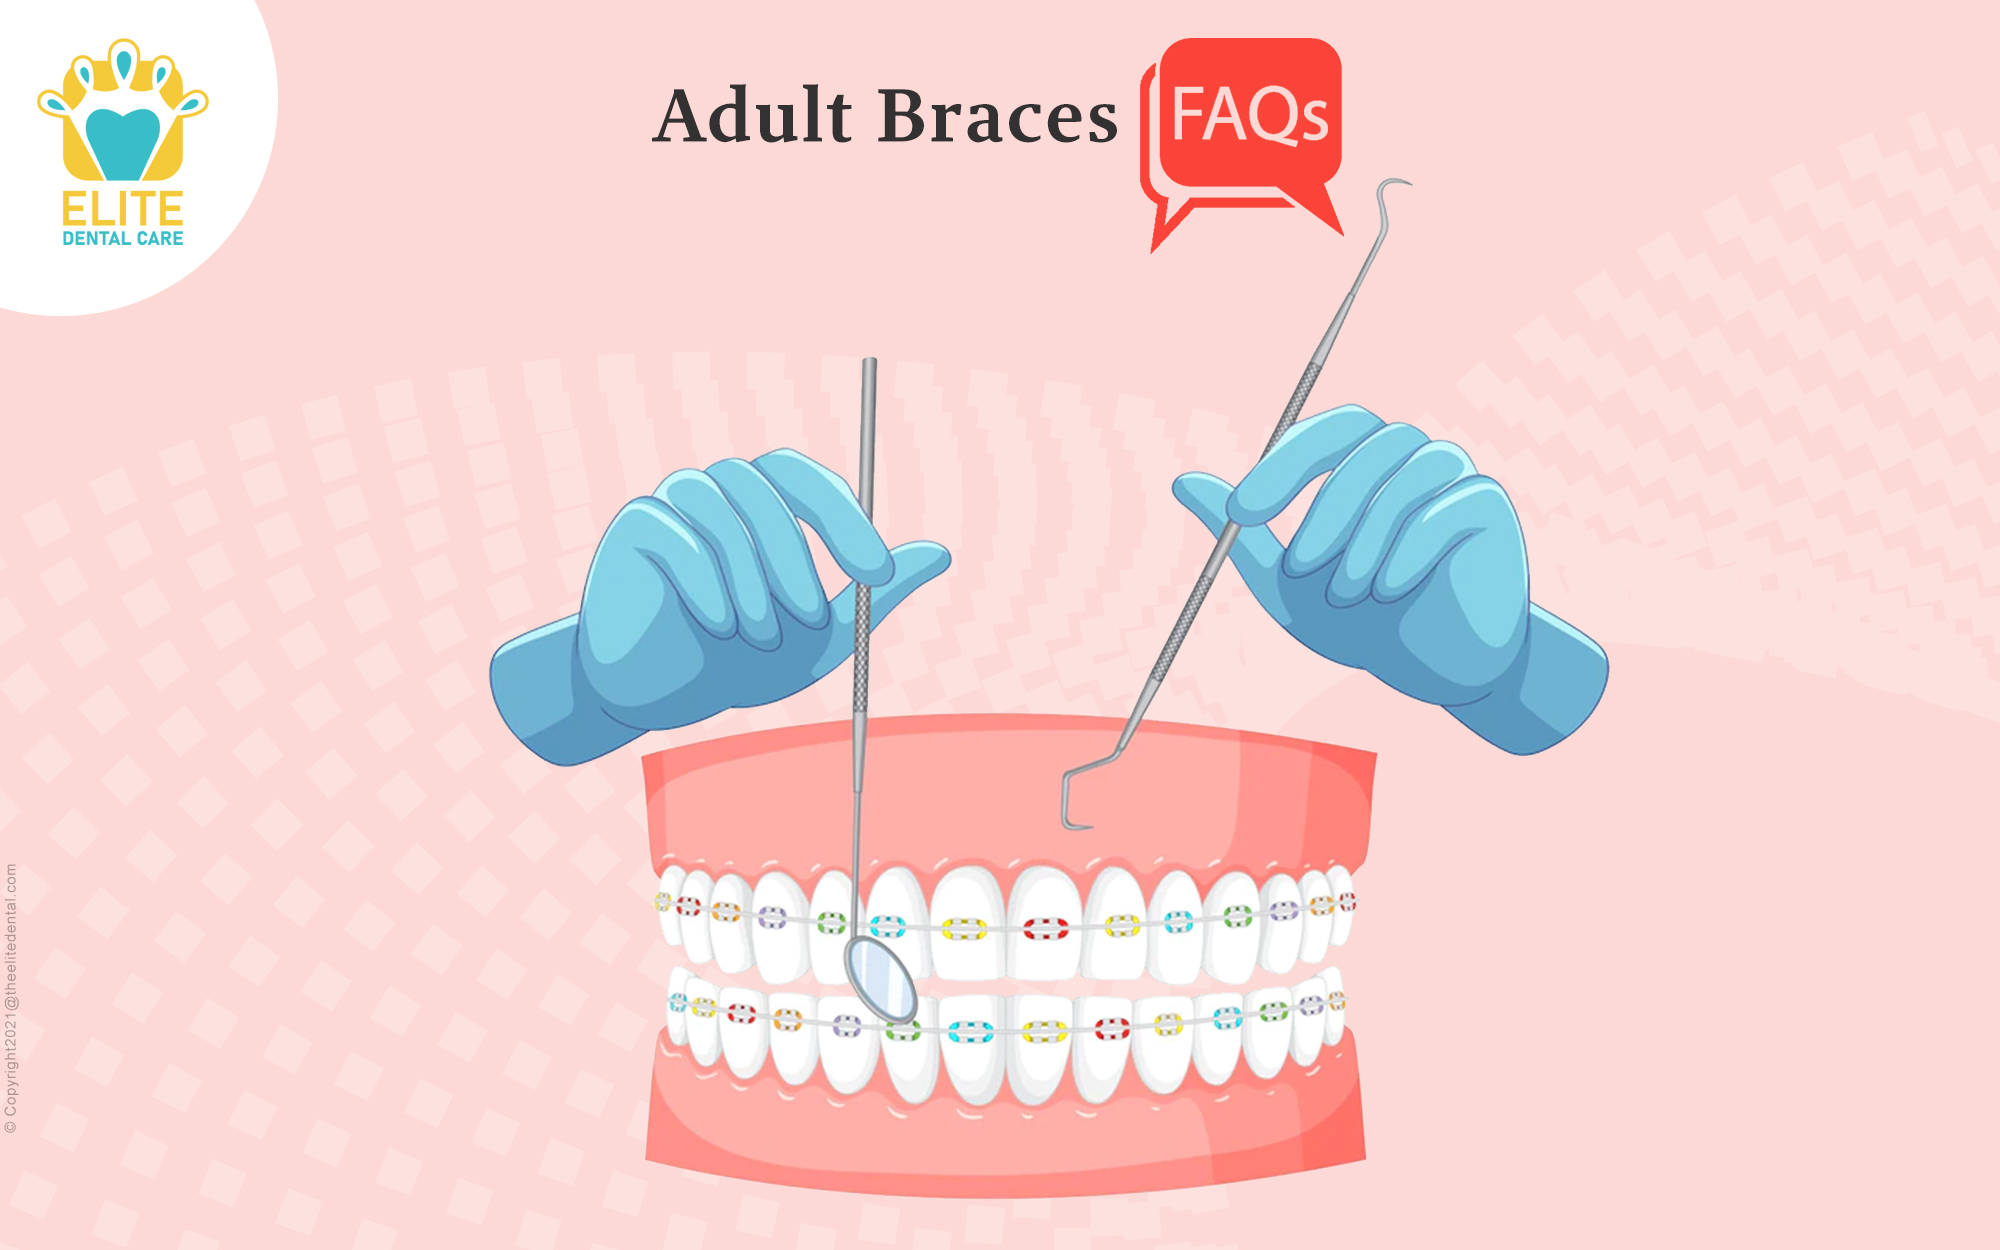 Adult Braces FAQs